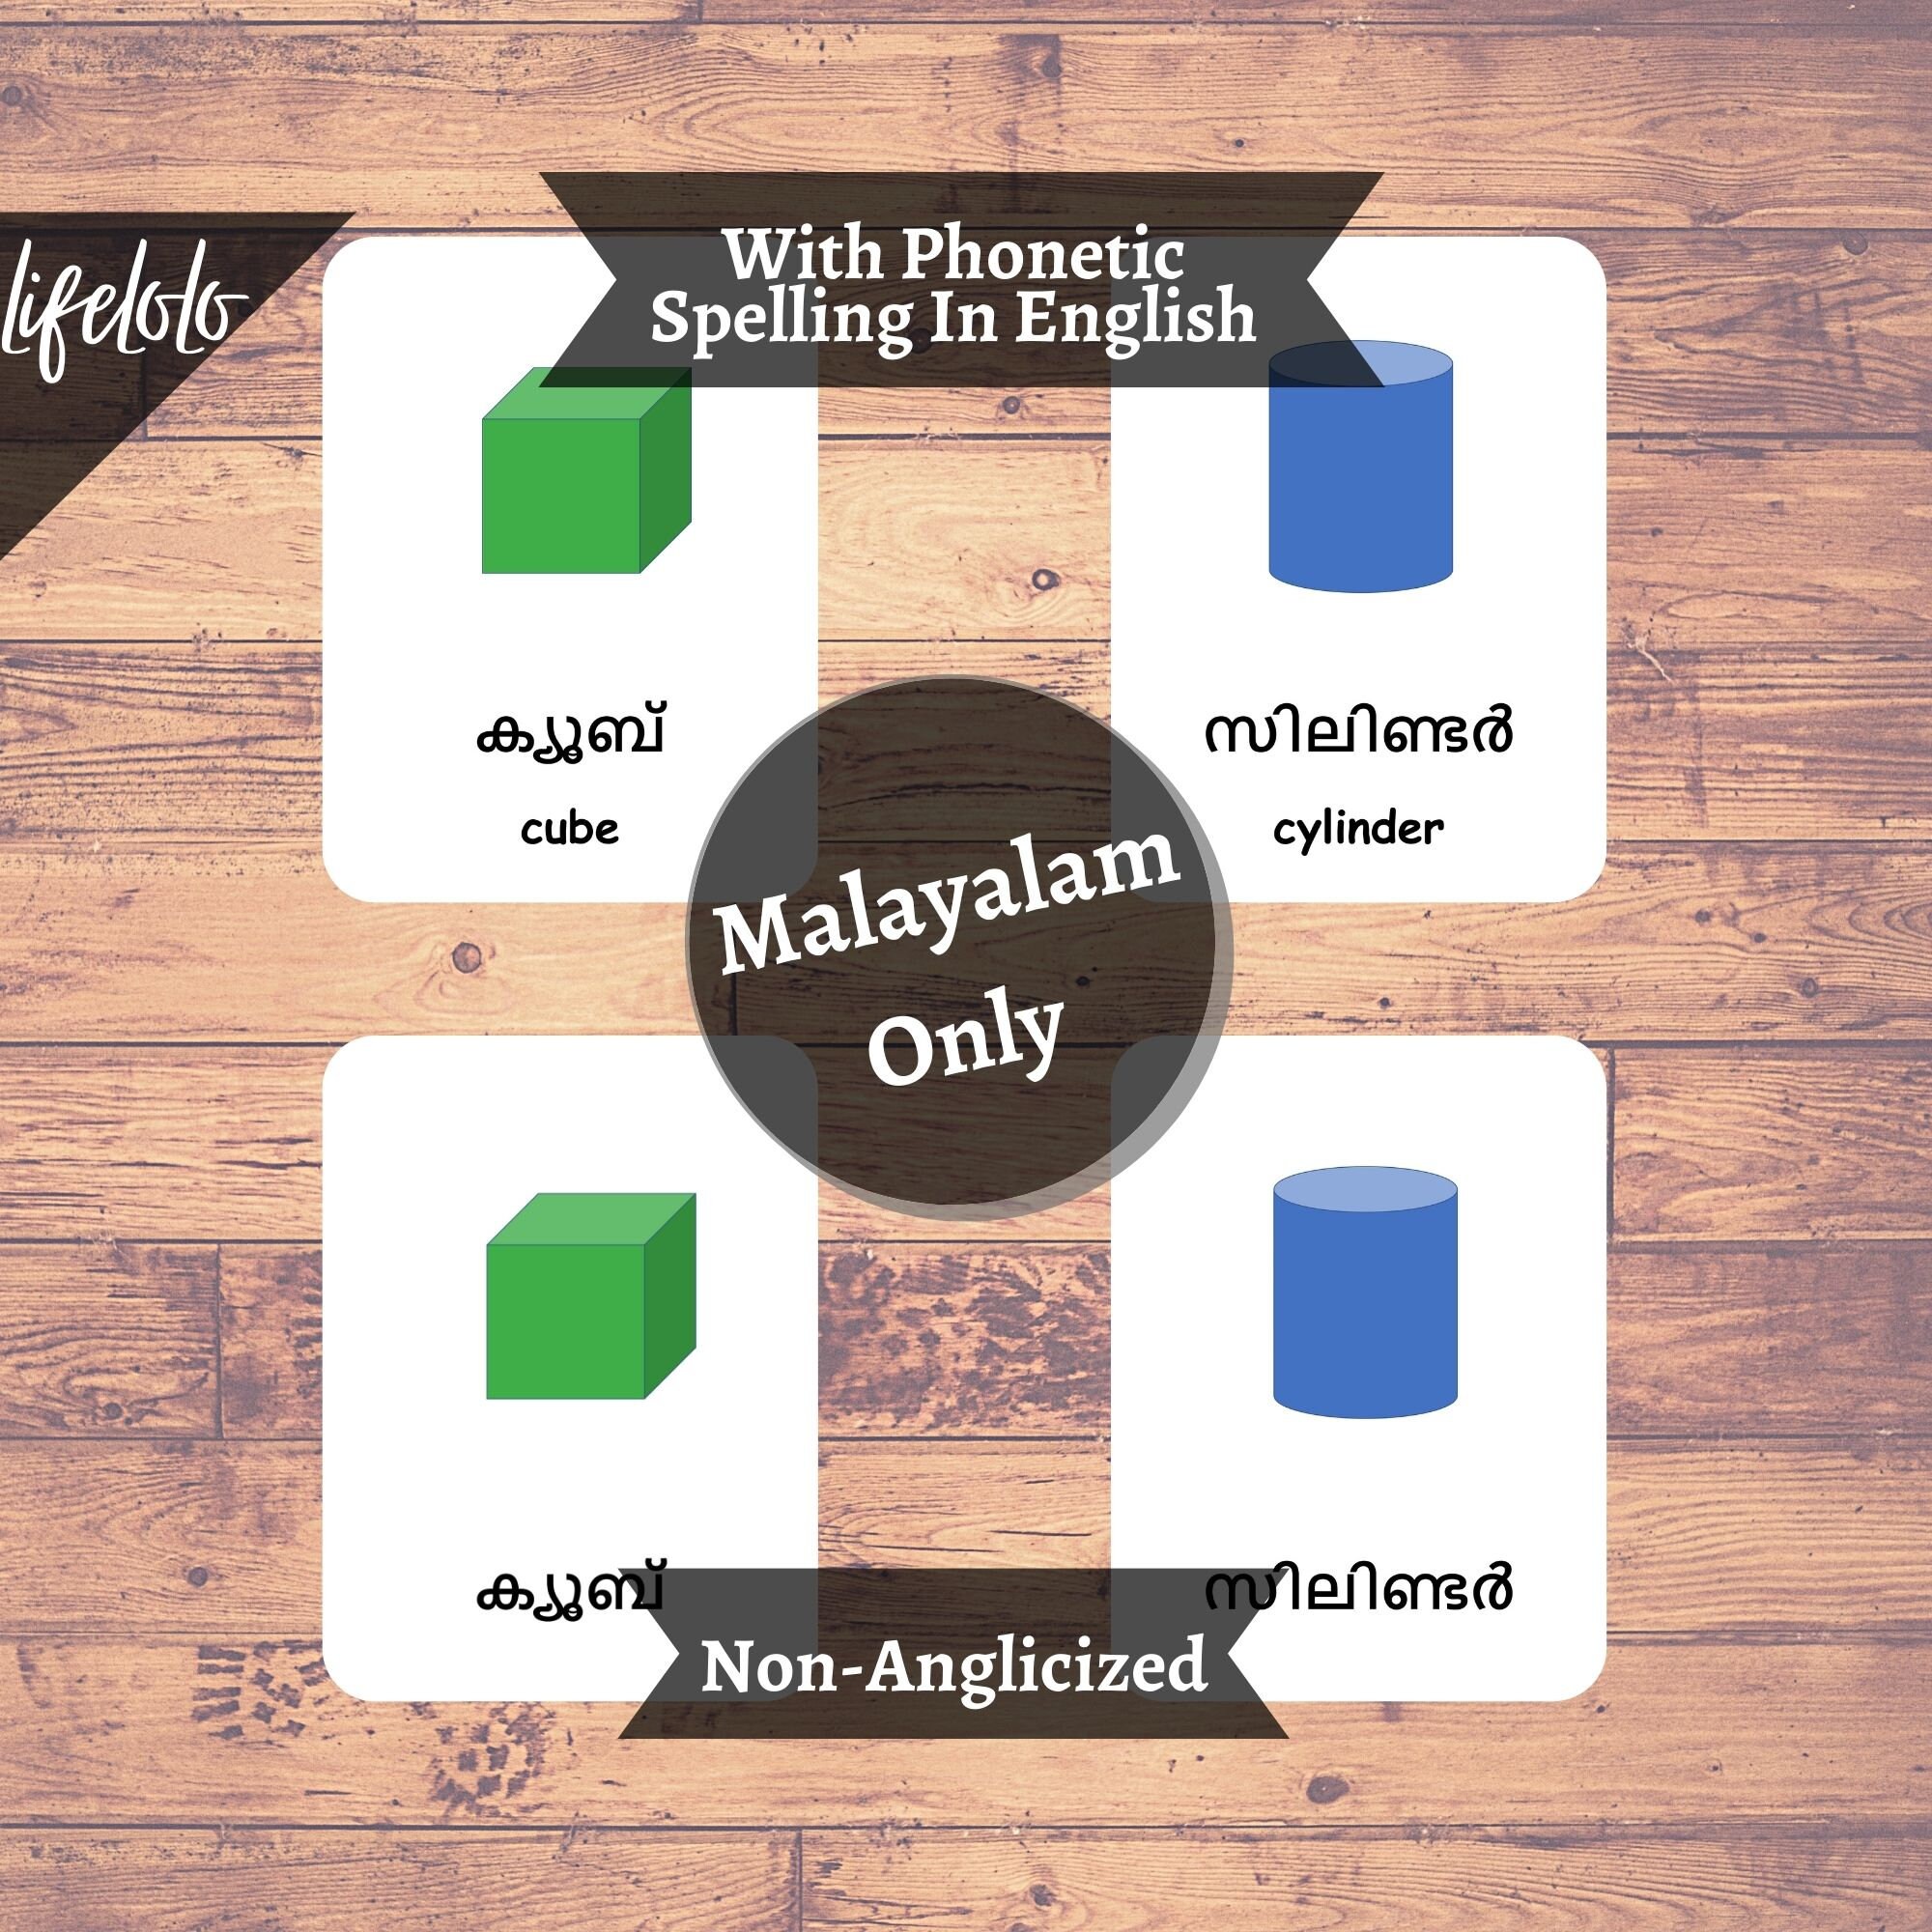 Shapes MALAYALAM Flash Cards English Bilingual Cards Geometric Shapes  Shapes Flash Cards Malayalam Flash Cards Printable Download 